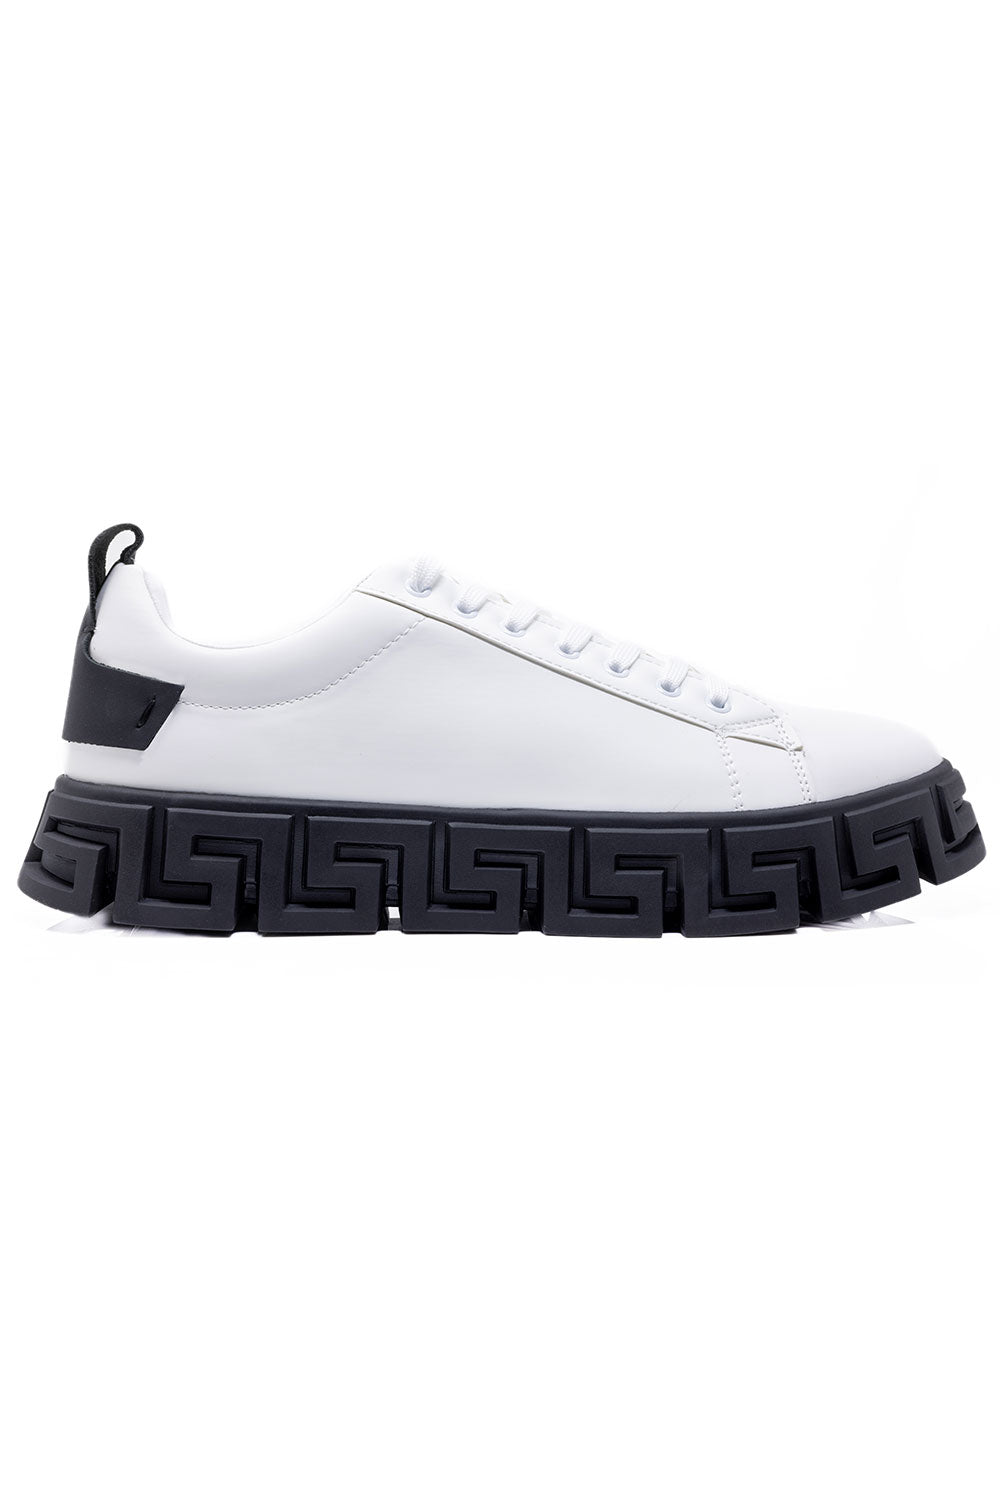 Barabas Men's Greek Key Sole Pattern Premium Sneakers 4SK06 White Black